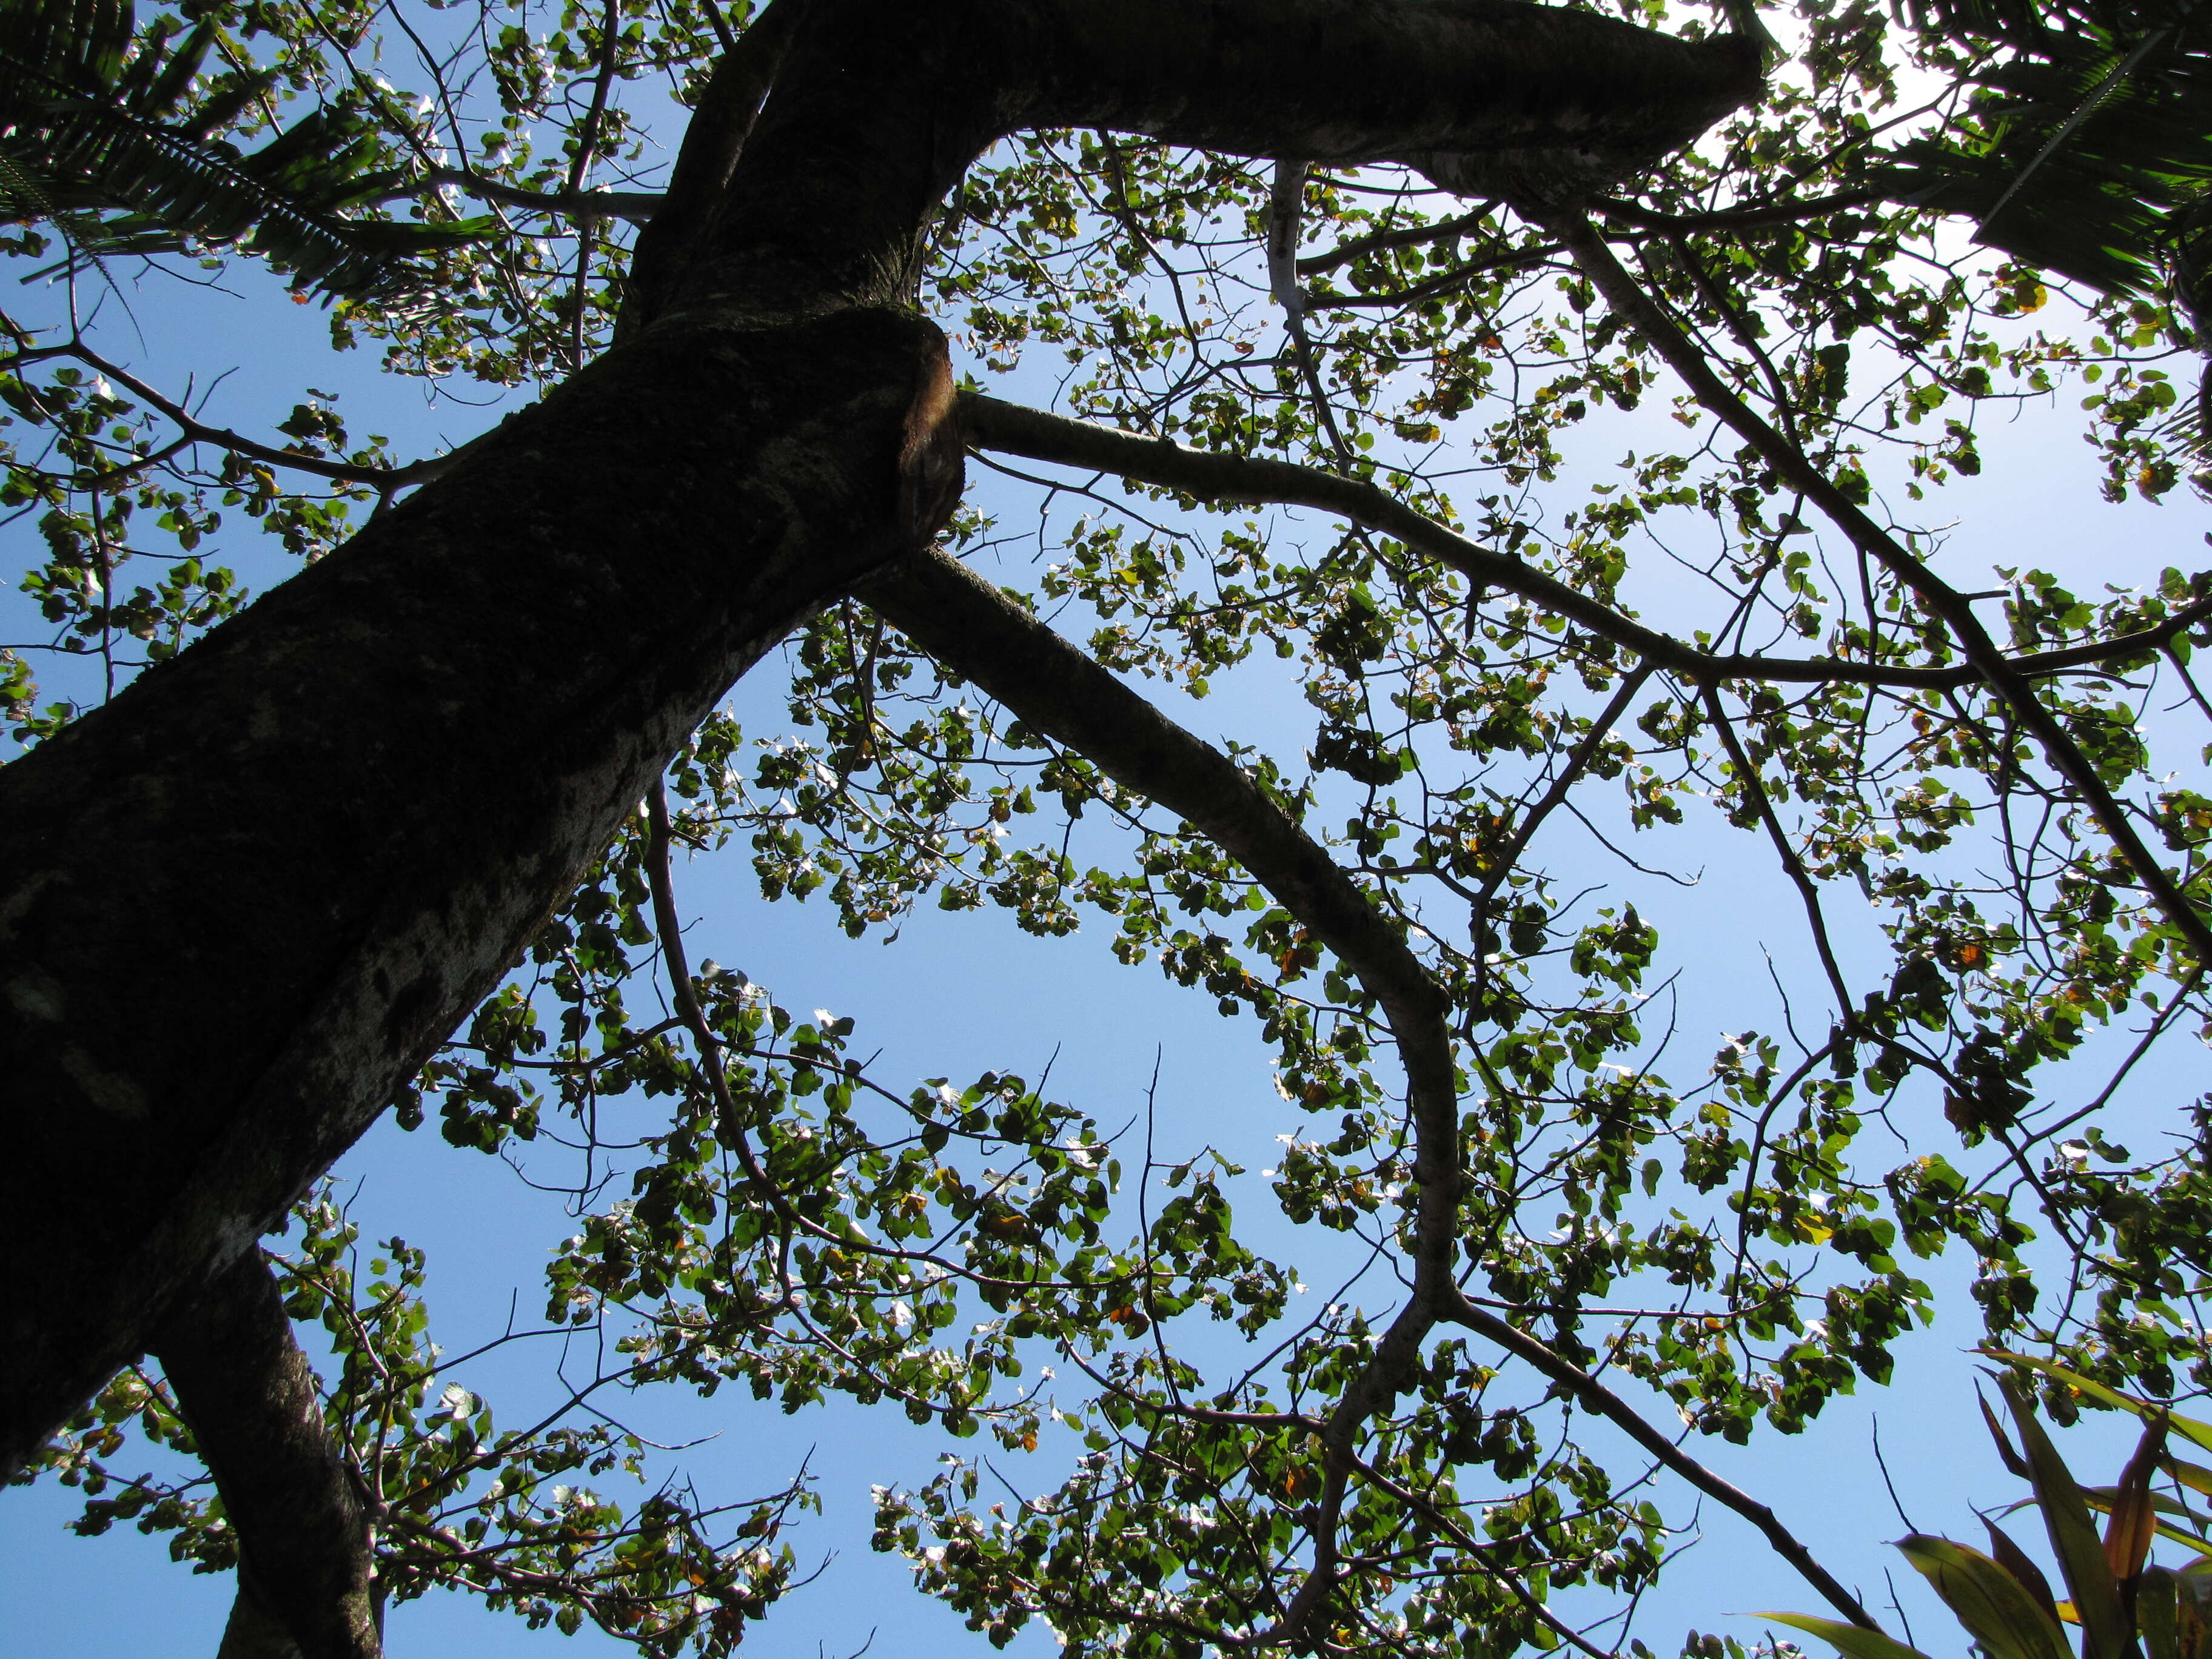 Image of balsa tree